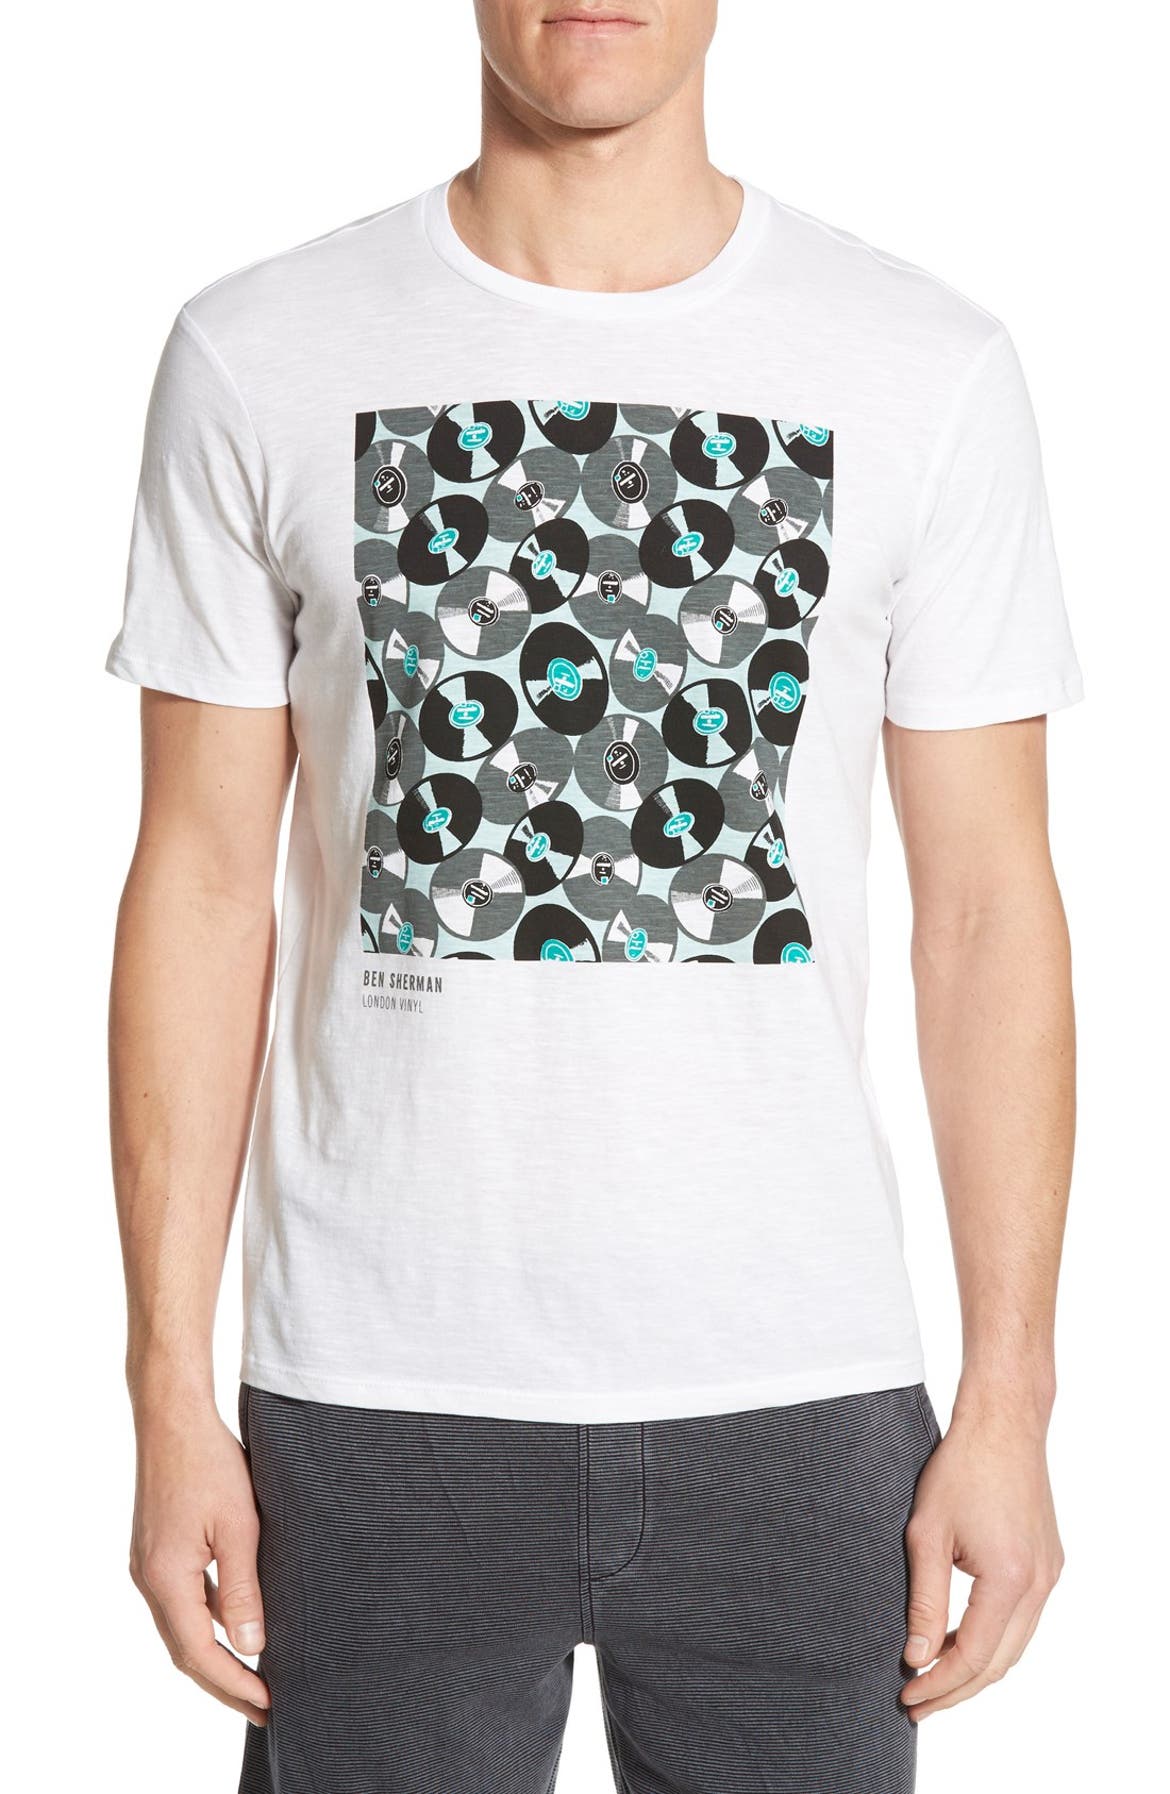 Ben Sherman 'London Vinyl' Graphic T-Shirt | Nordstrom